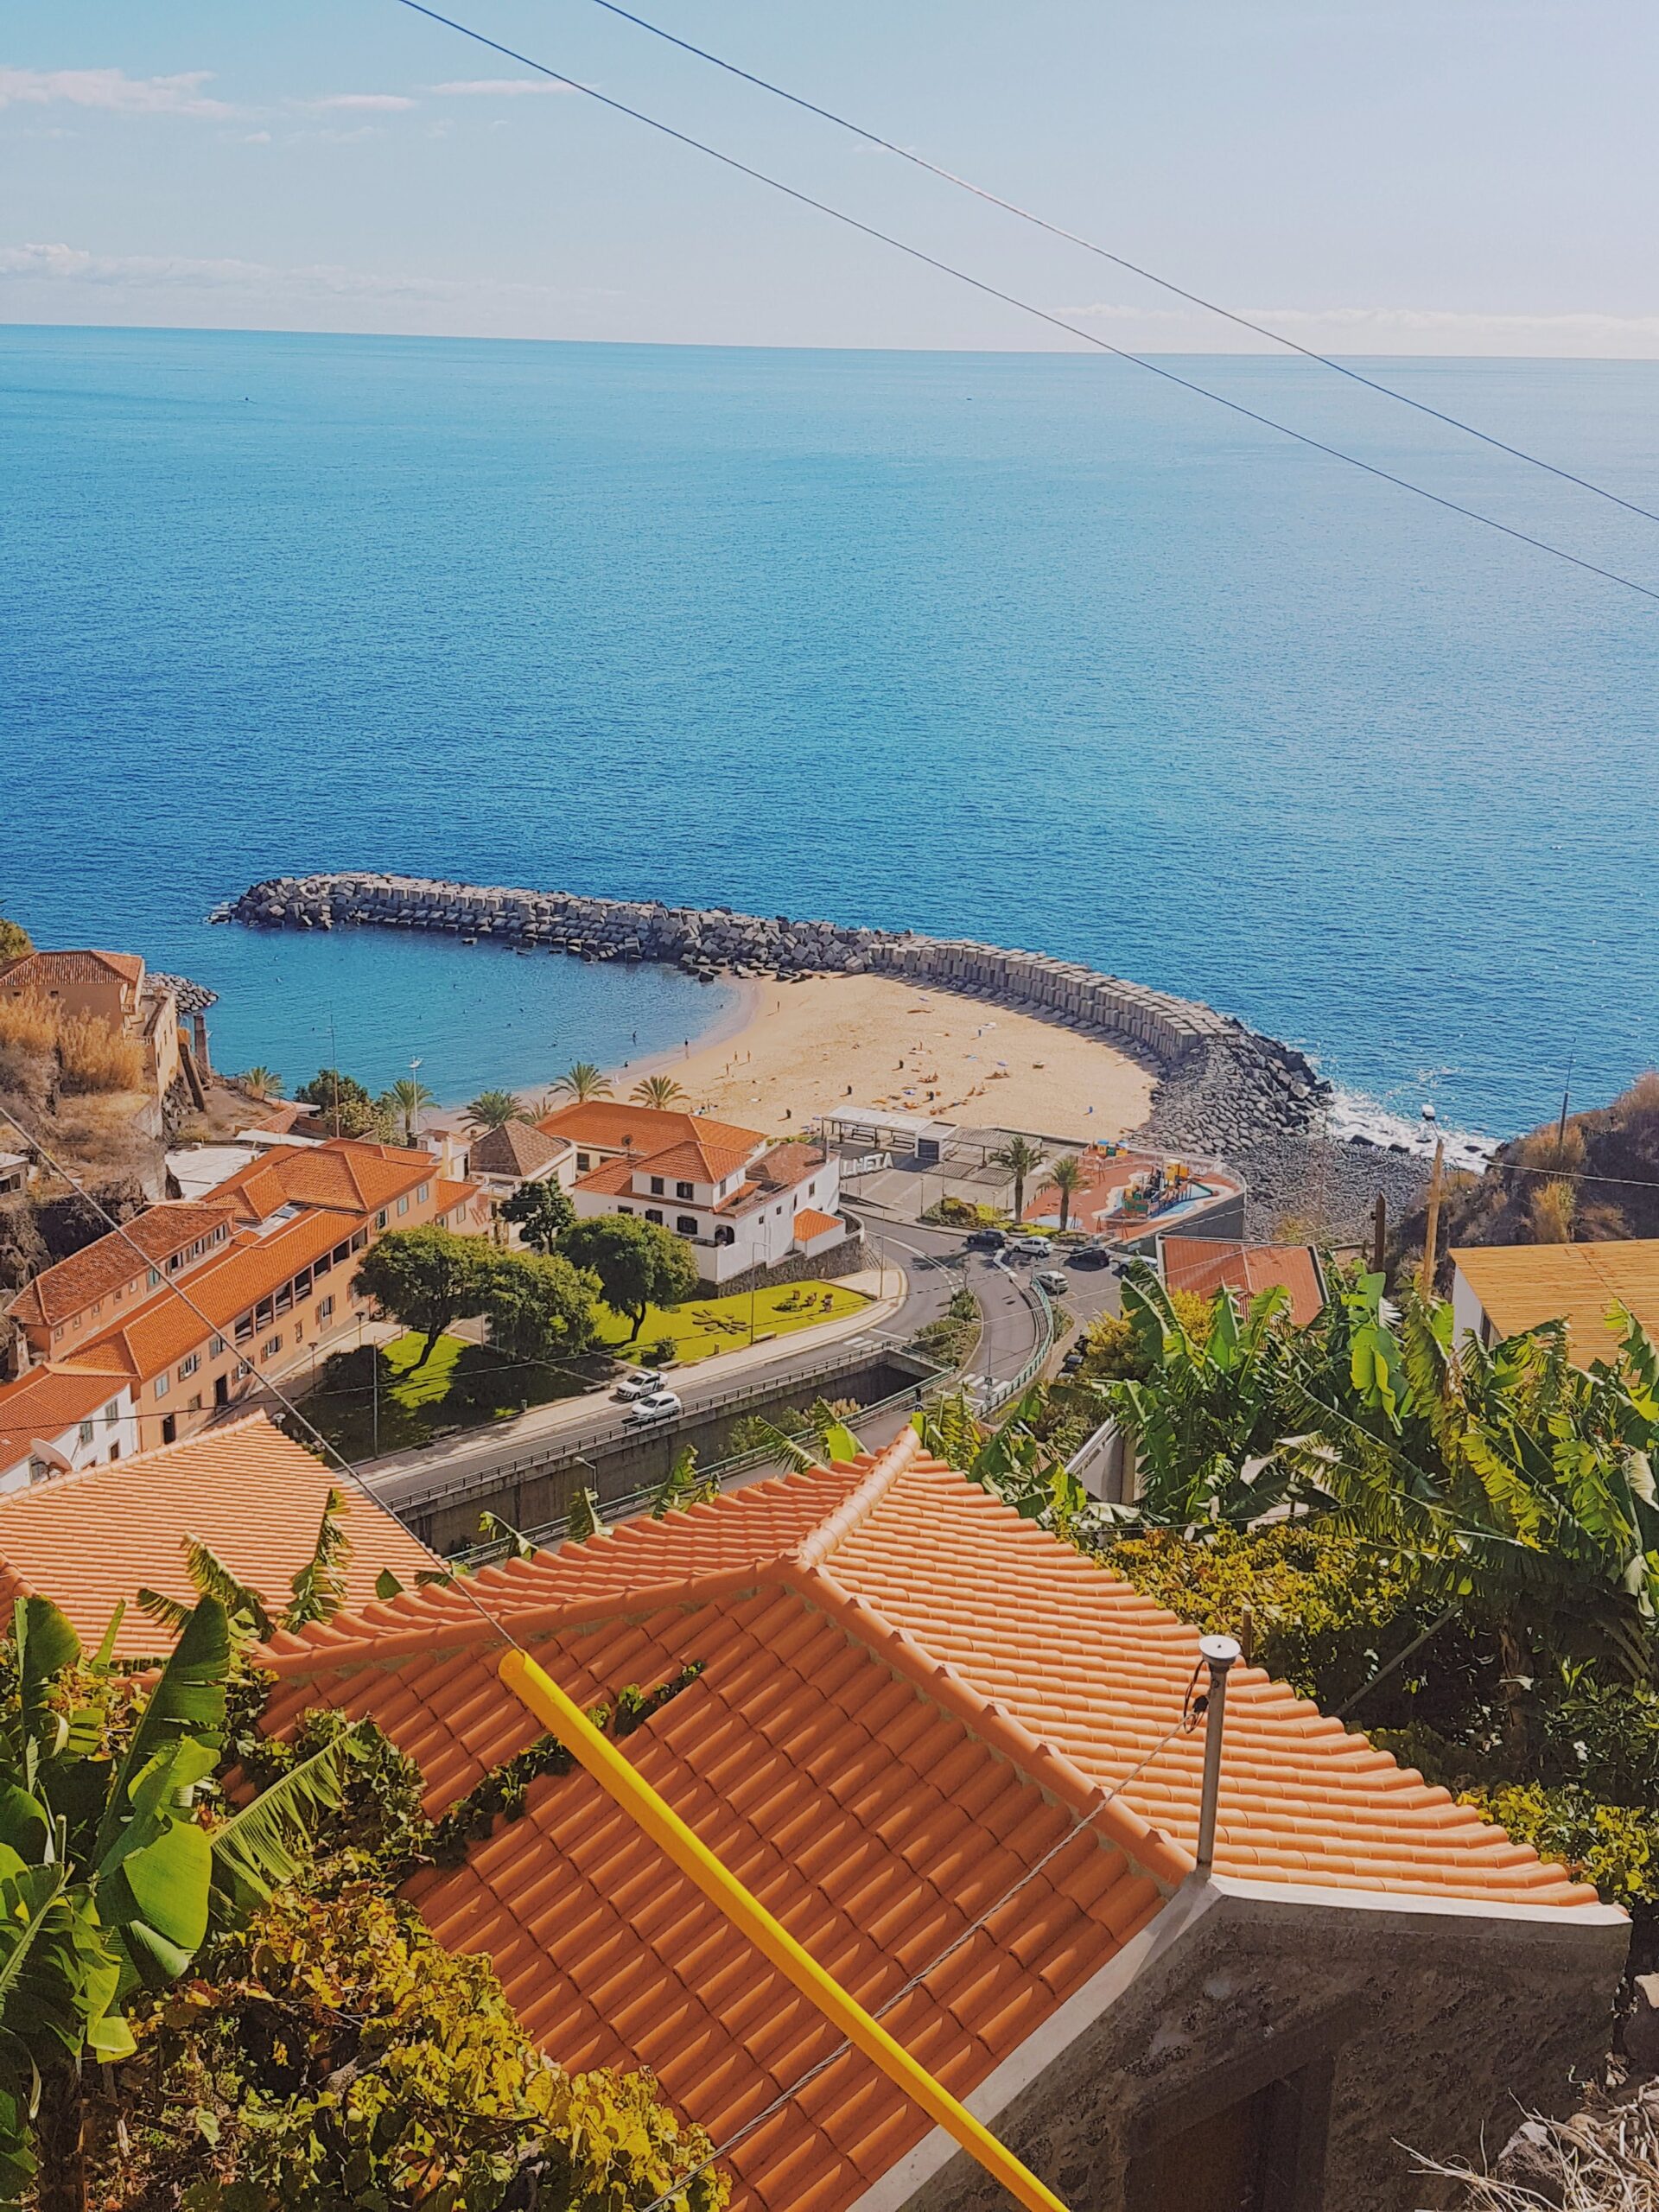 Living in Madeira